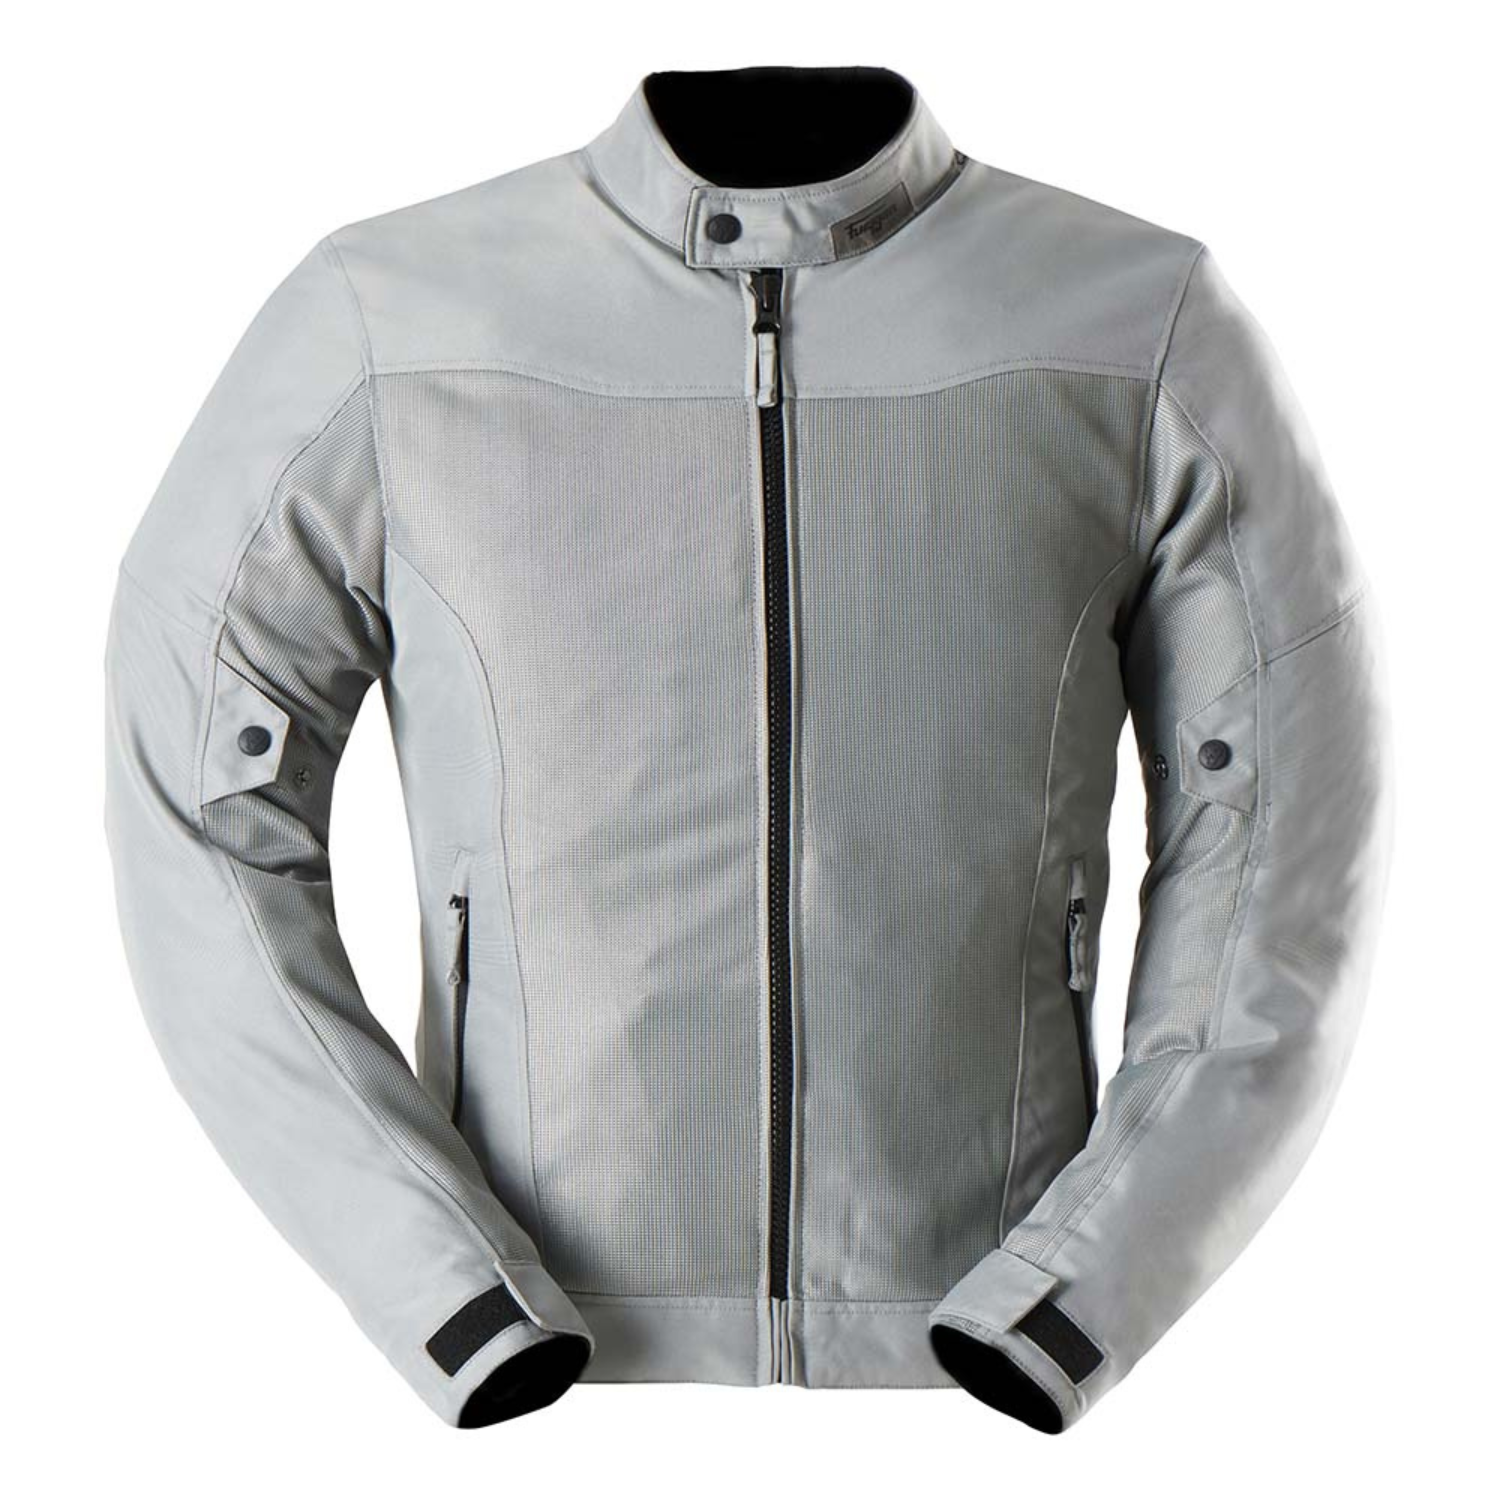 Image of Furygan Mistral Evo 3 Jacket Grey Size 4XL ID 3435980362713